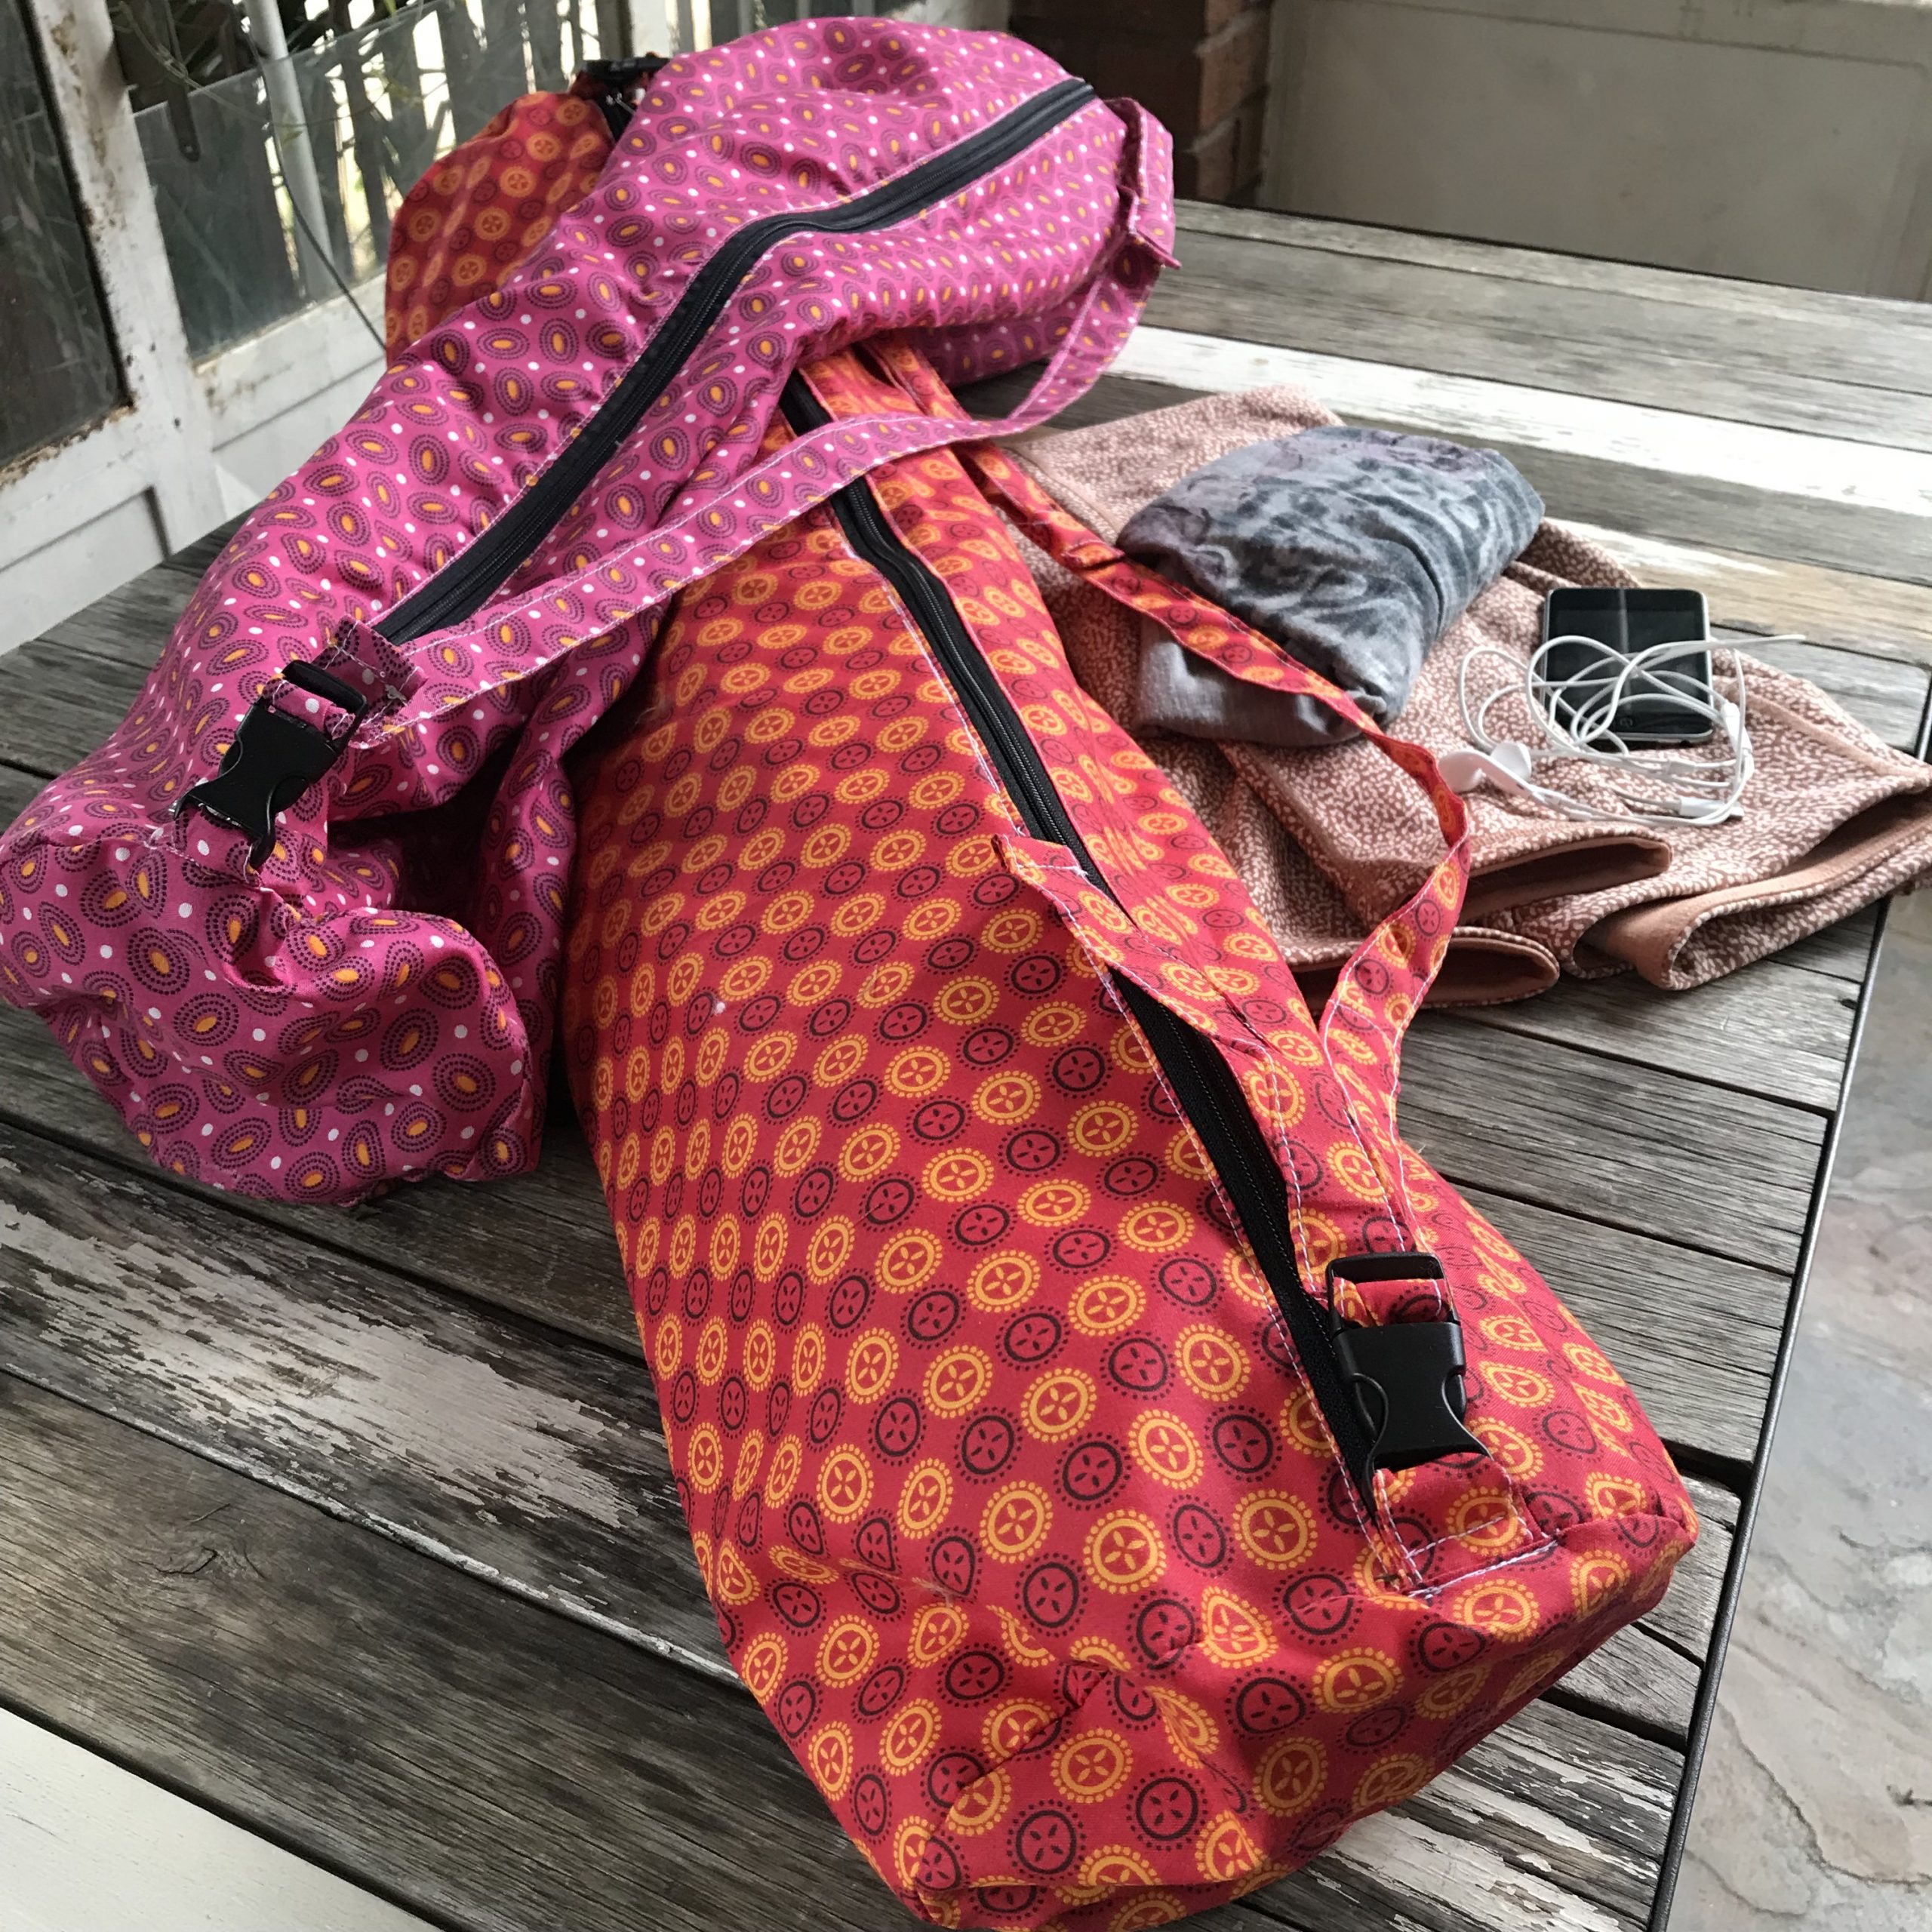 Drawstring Yoga Mat bag - Easy Carry yoga Mat Bag